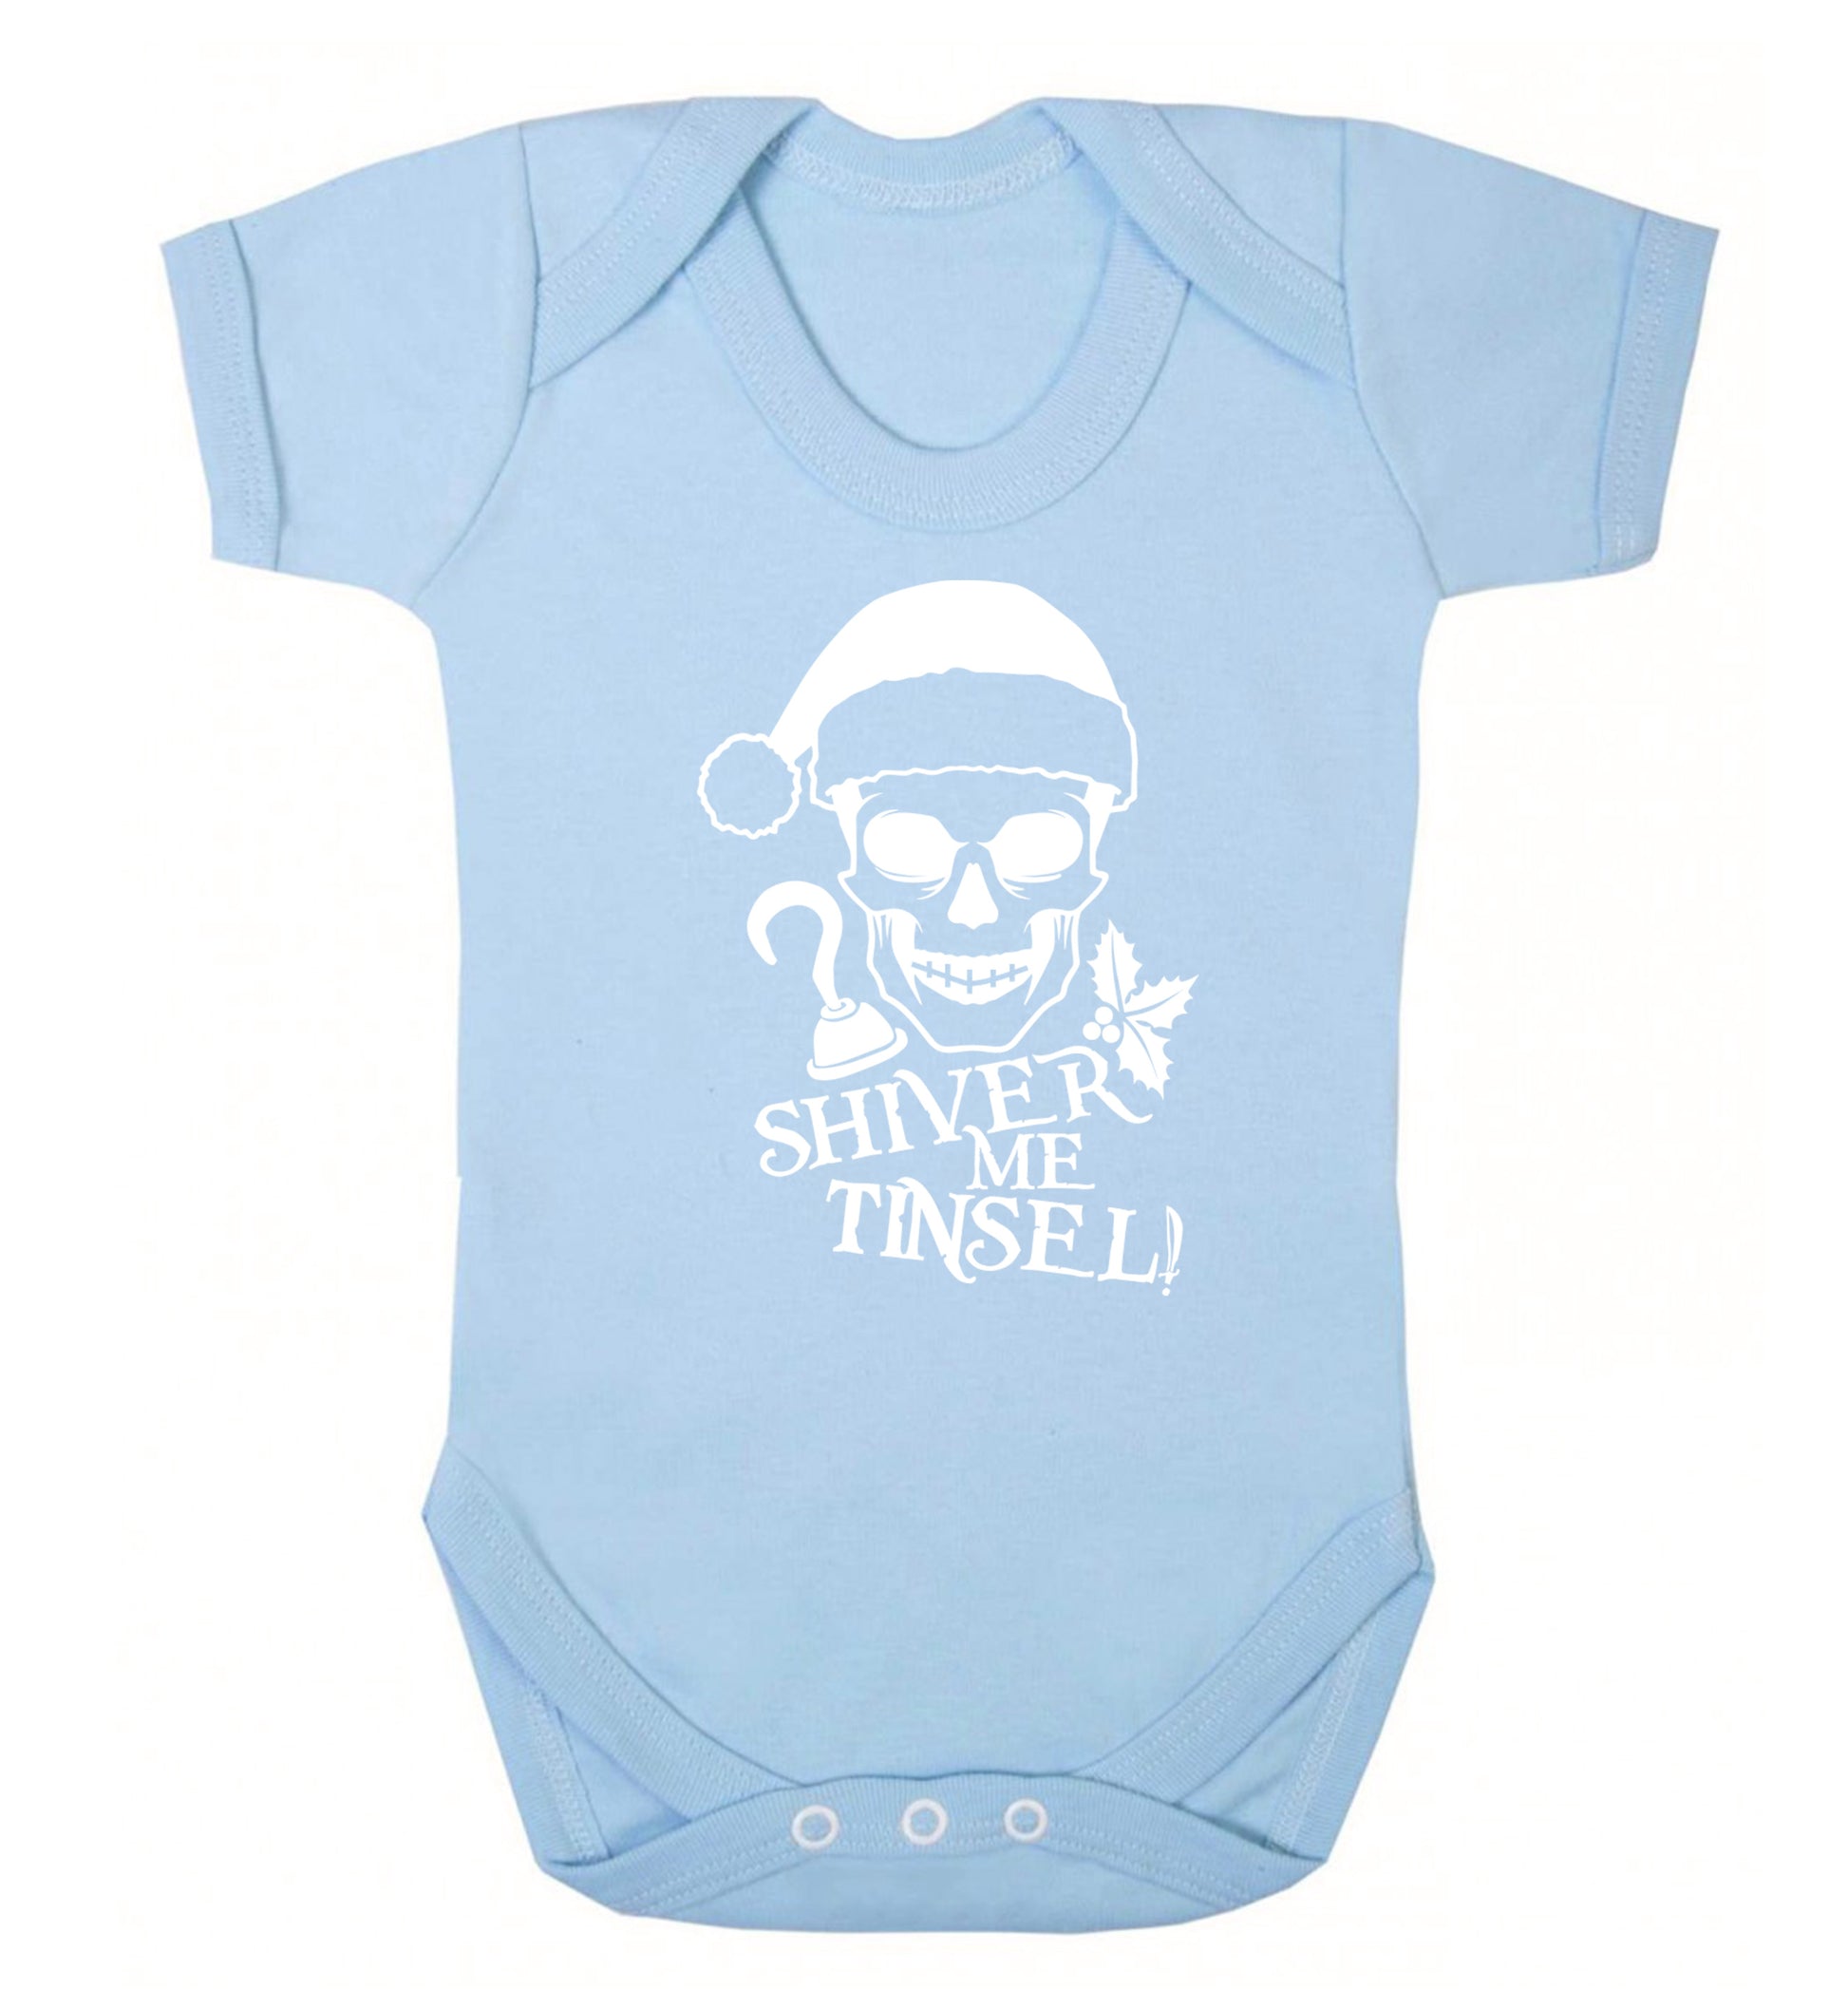 Shiver me tinsel Baby Vest pale blue 18-24 months